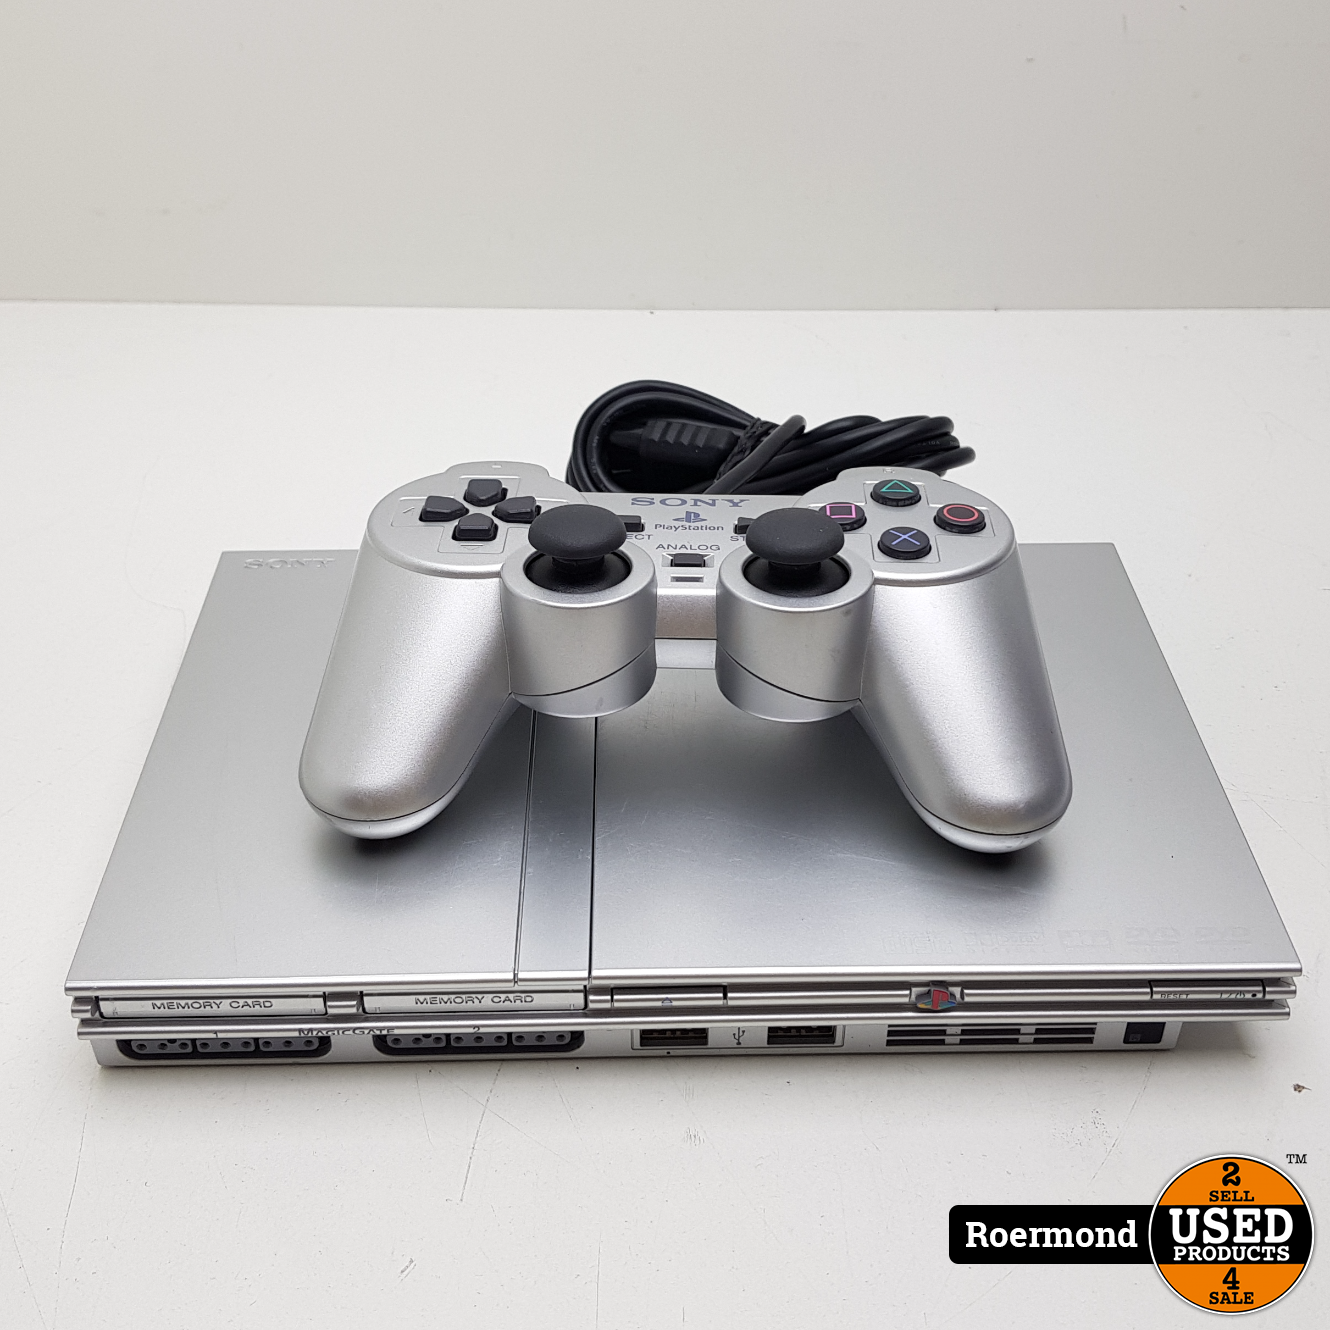 Boos amusement vloek Sony Playstation 2 slim Zilver met controller I Zgan - Used Products  Roermond